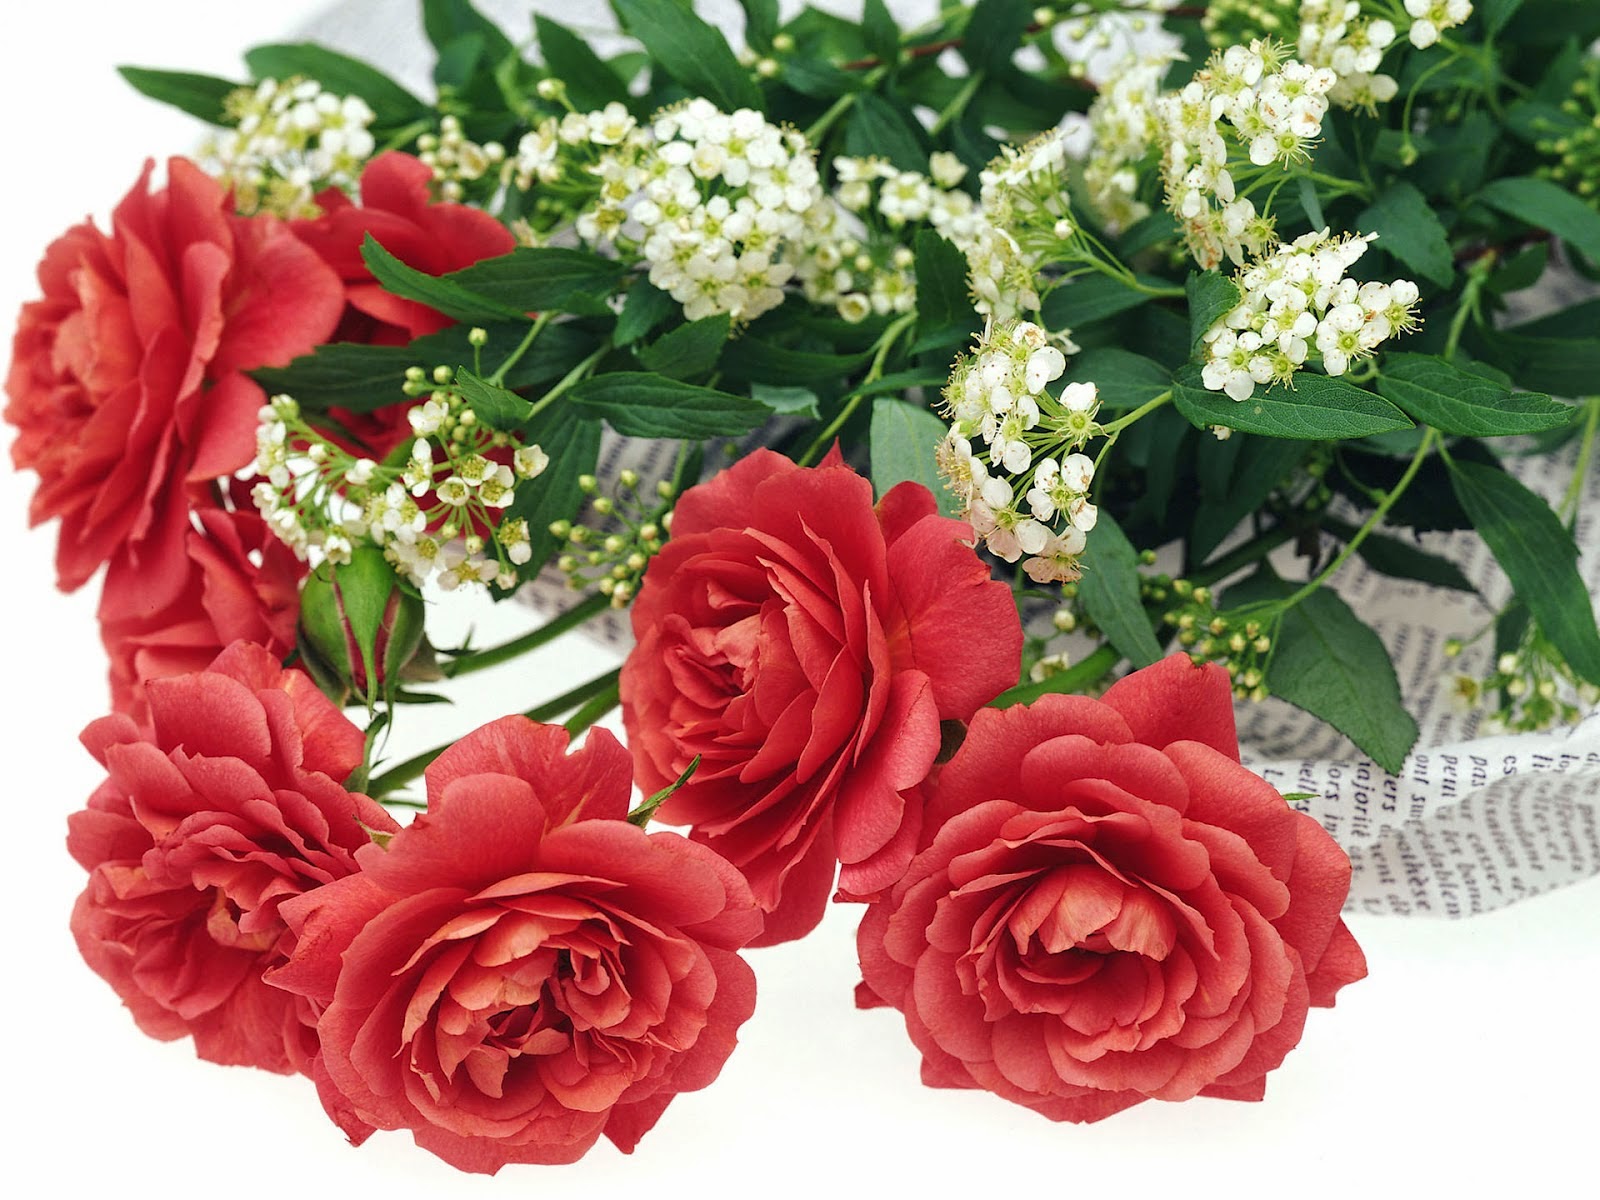 Kumpulan Gambar Bunga Romantis I Love You - Flowers Romantic Other Than Roses - HD Wallpaper 